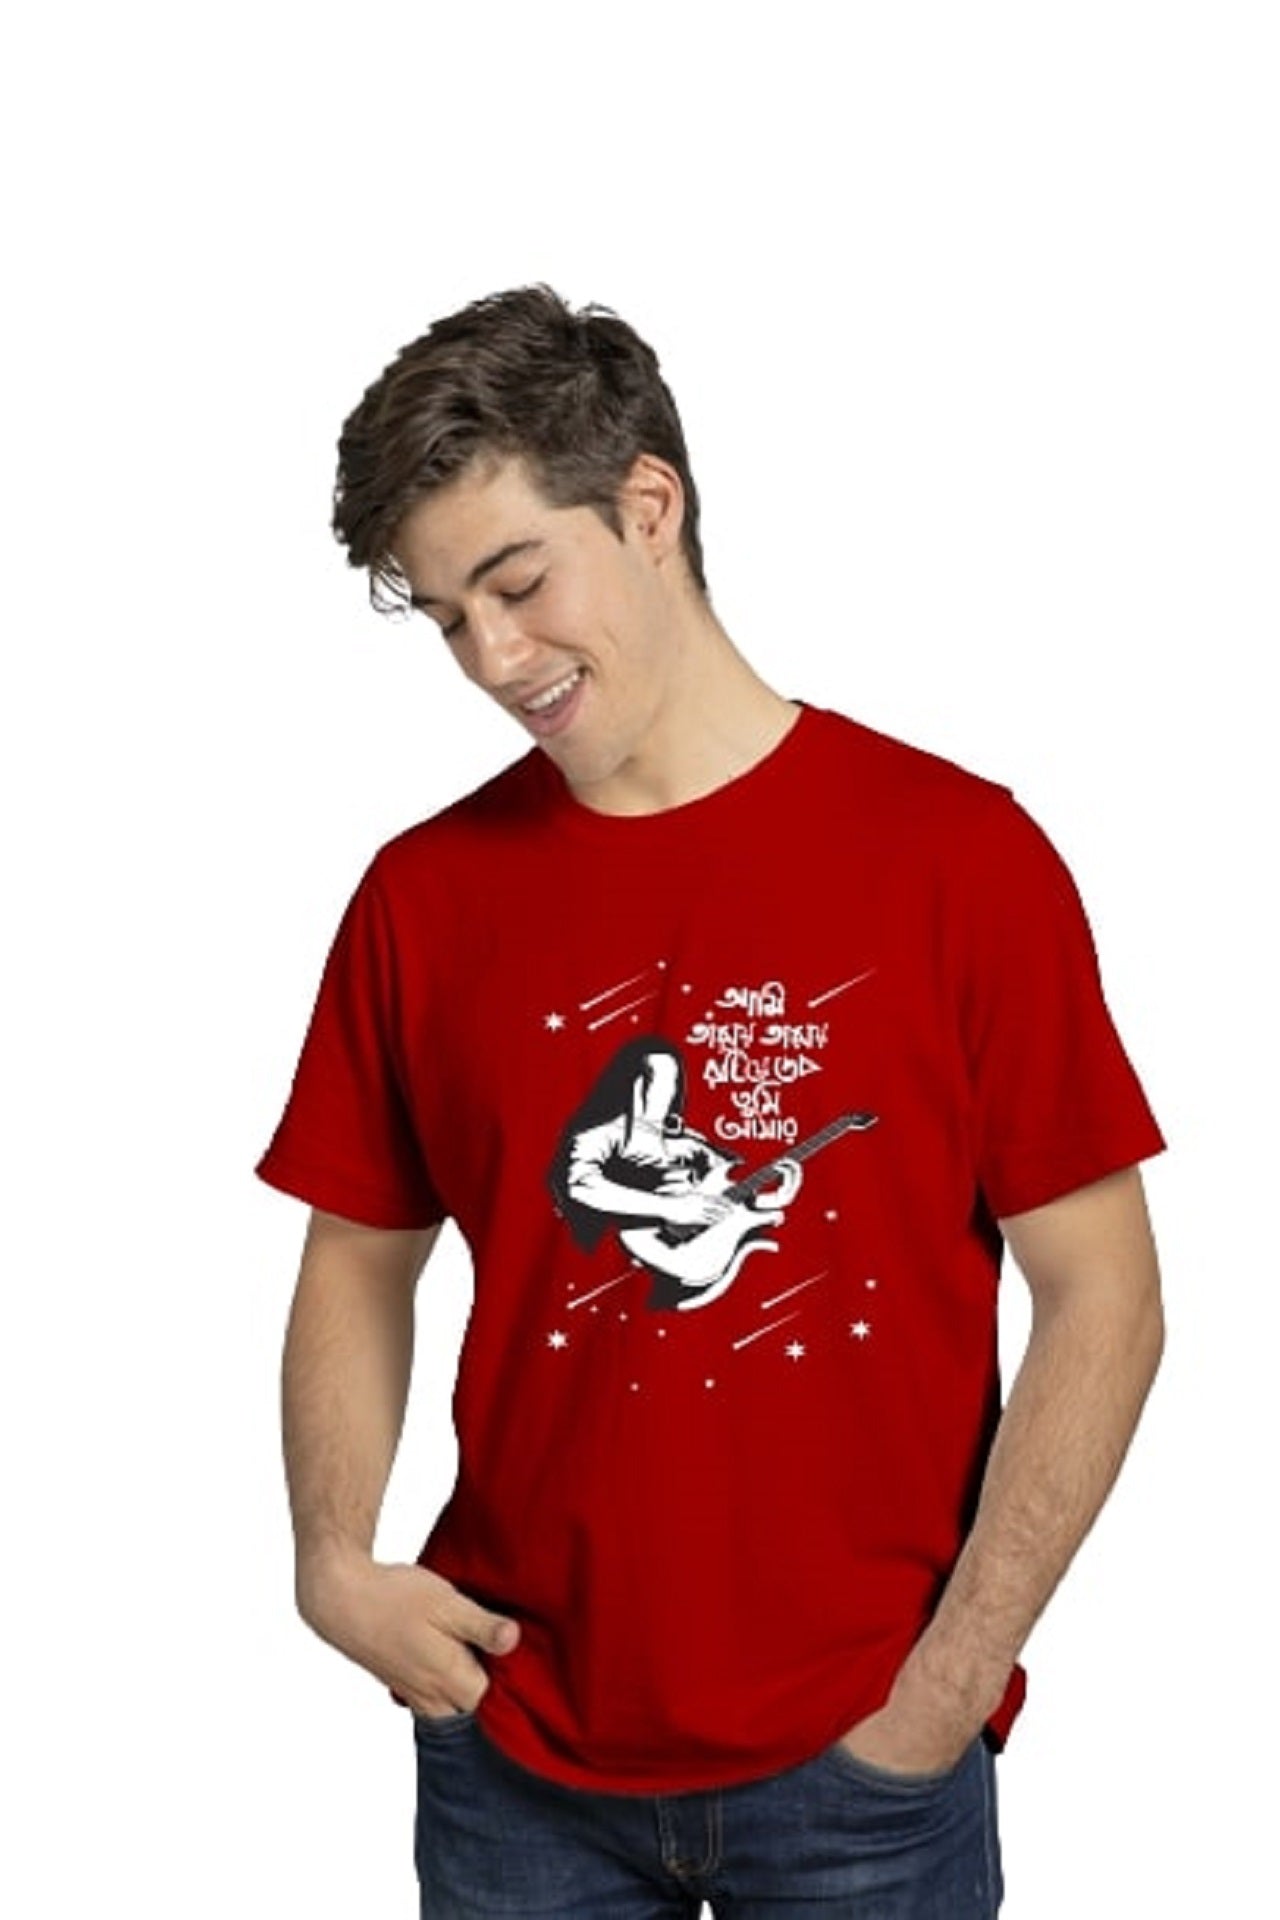 Branded Bengali T shirts for men Online